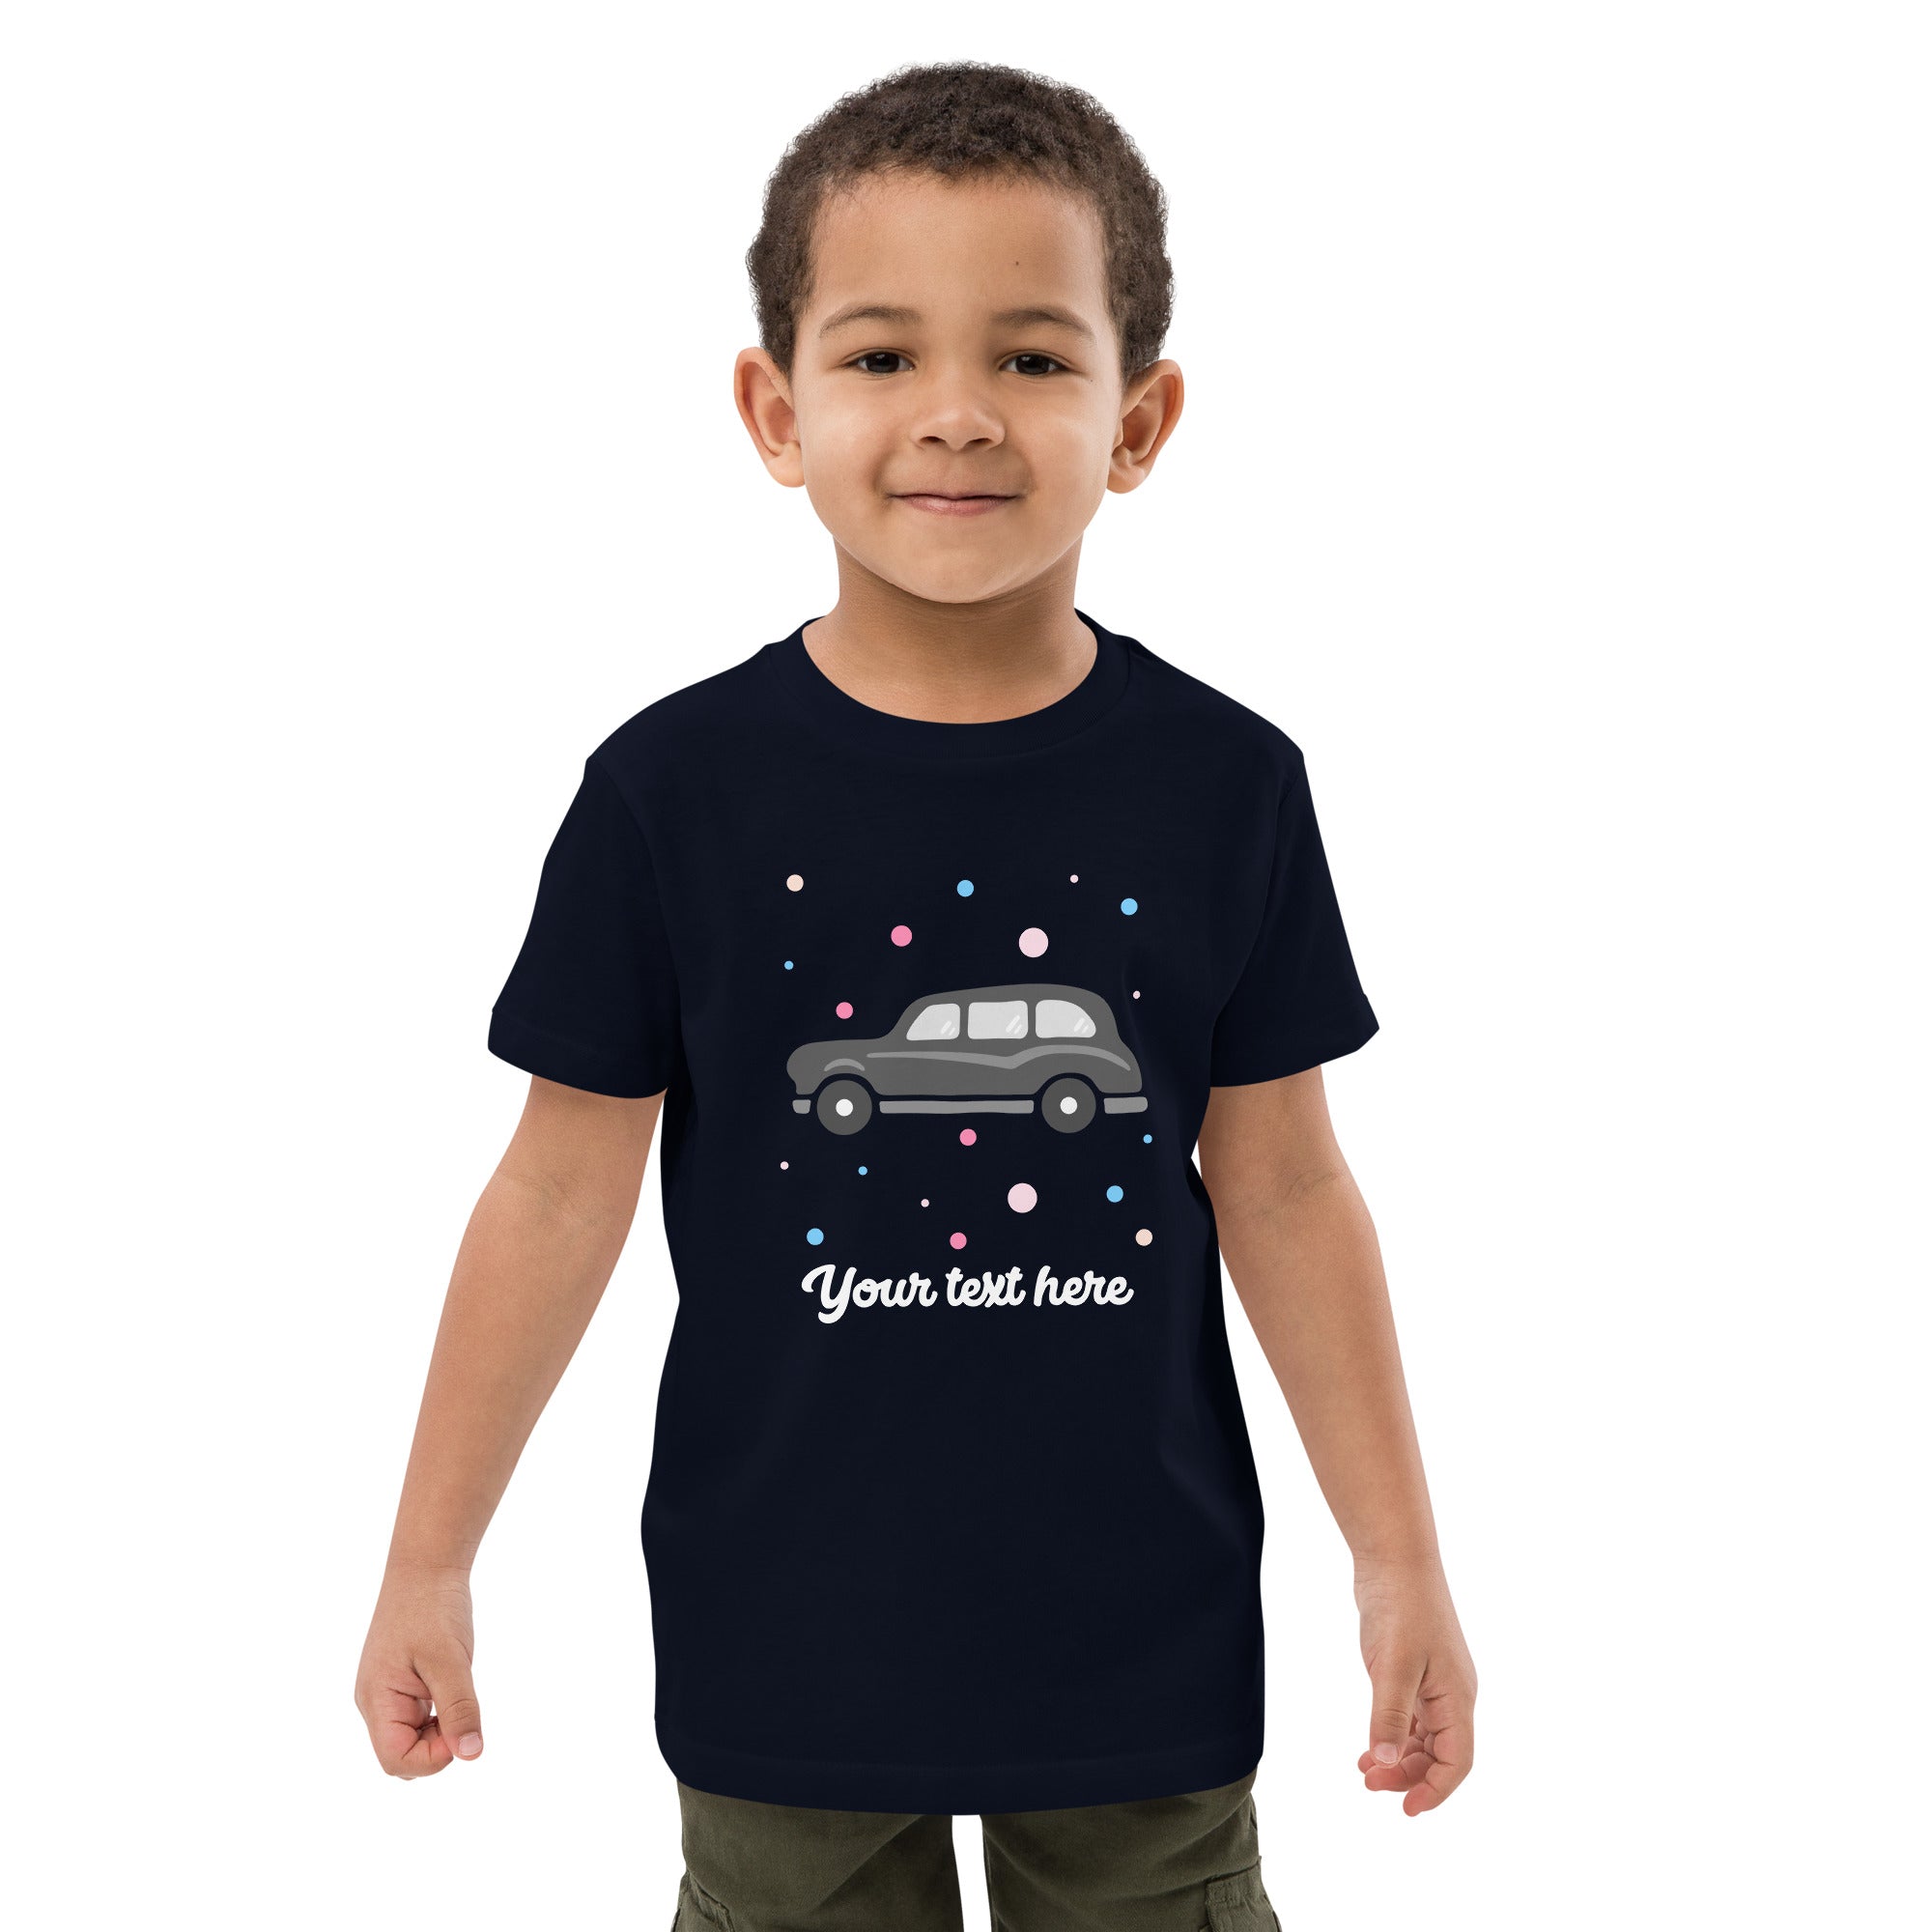 Personalised Custom Text - Organic Cotton Kids T-Shirt - London Doodles - Black Taxi - Navy 2